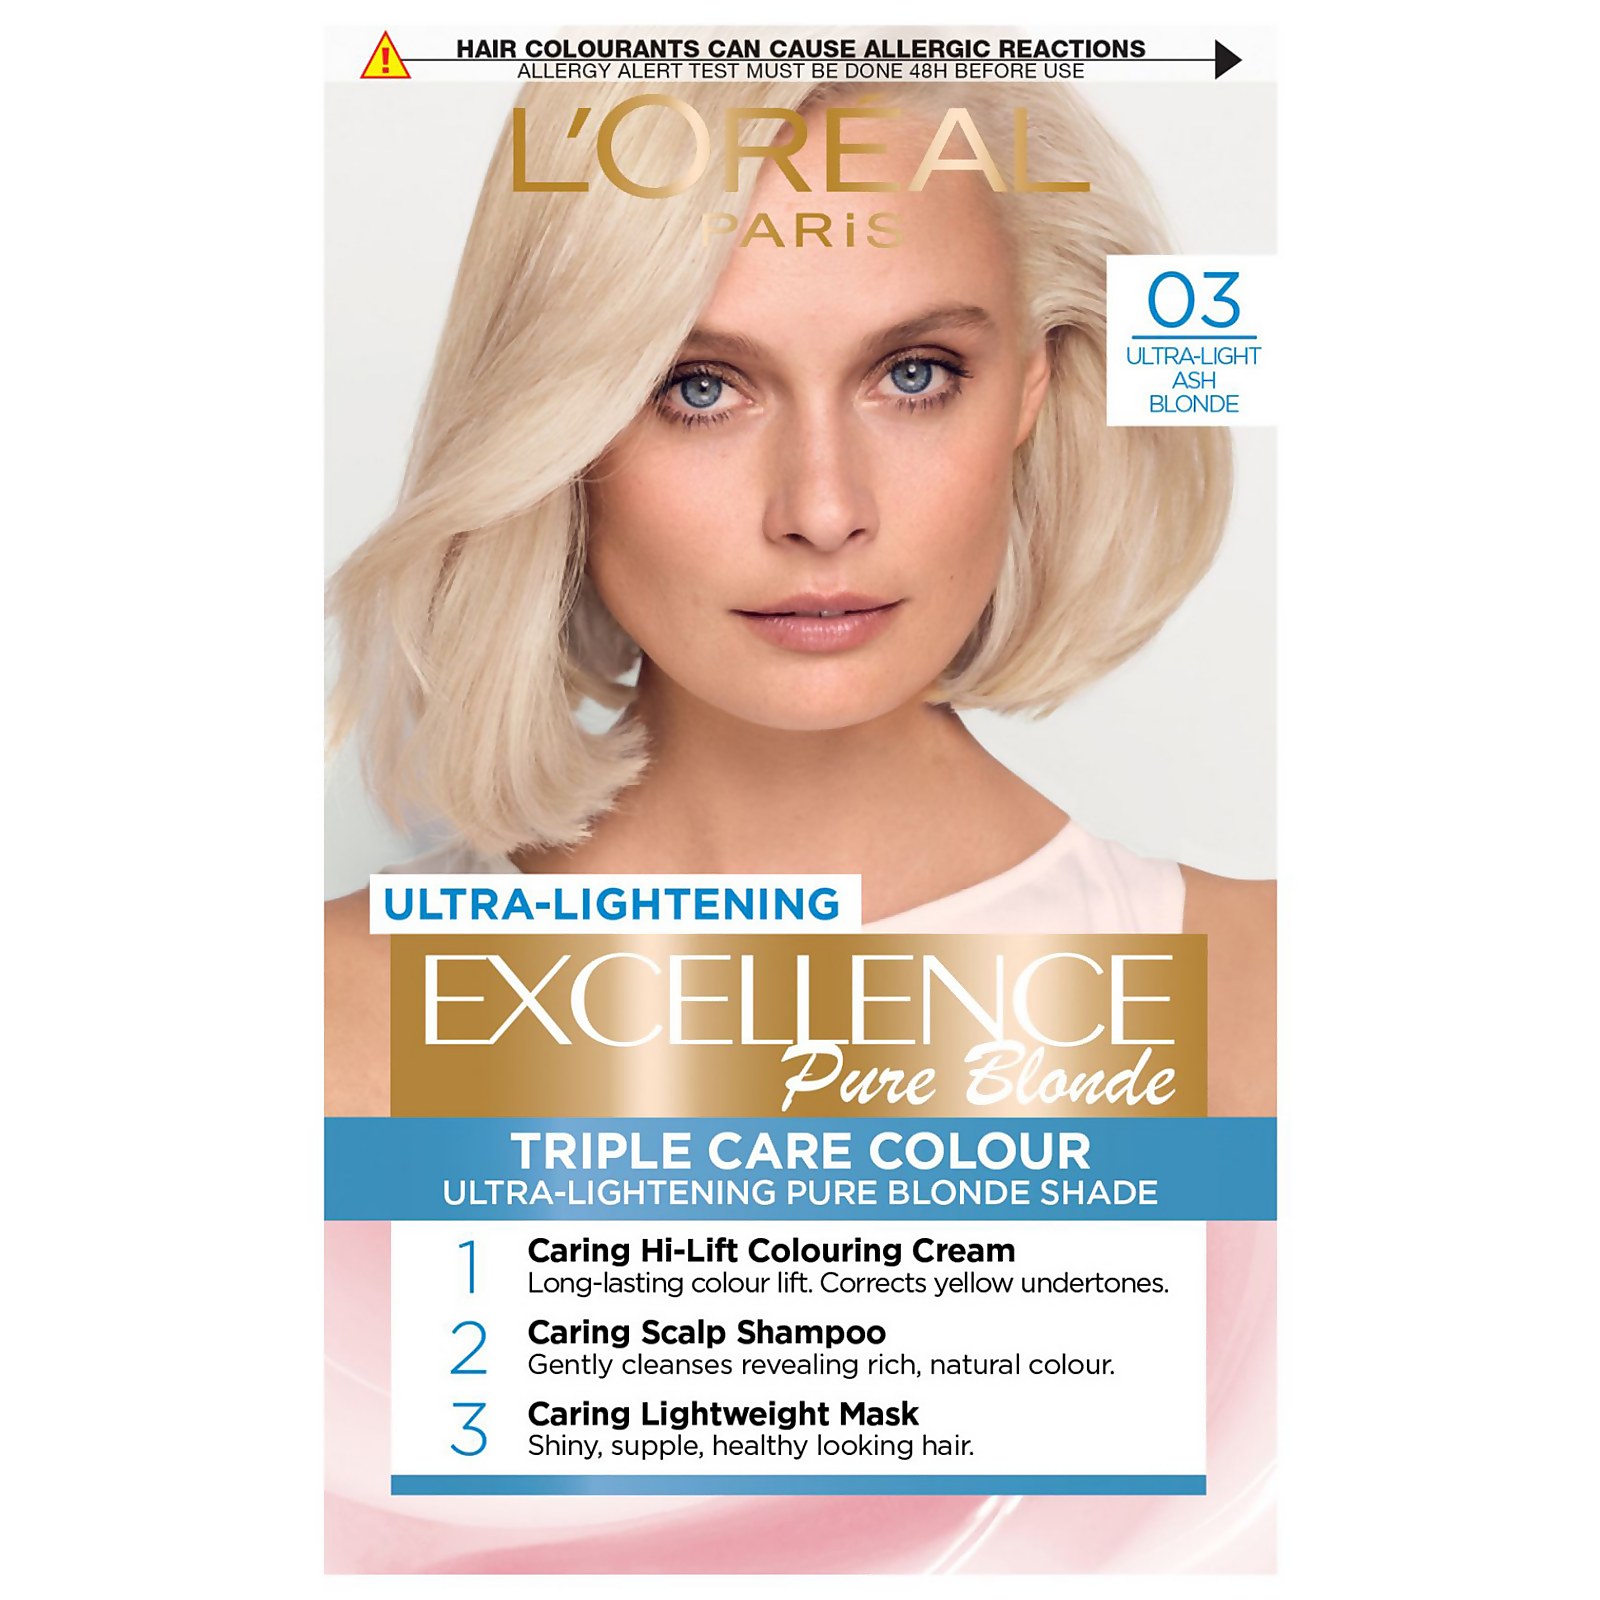 L'Oreal Paris Excellence Creme Permanent Hair Dye (Various Shades) - 03 Ultra-Light Ash Blonde